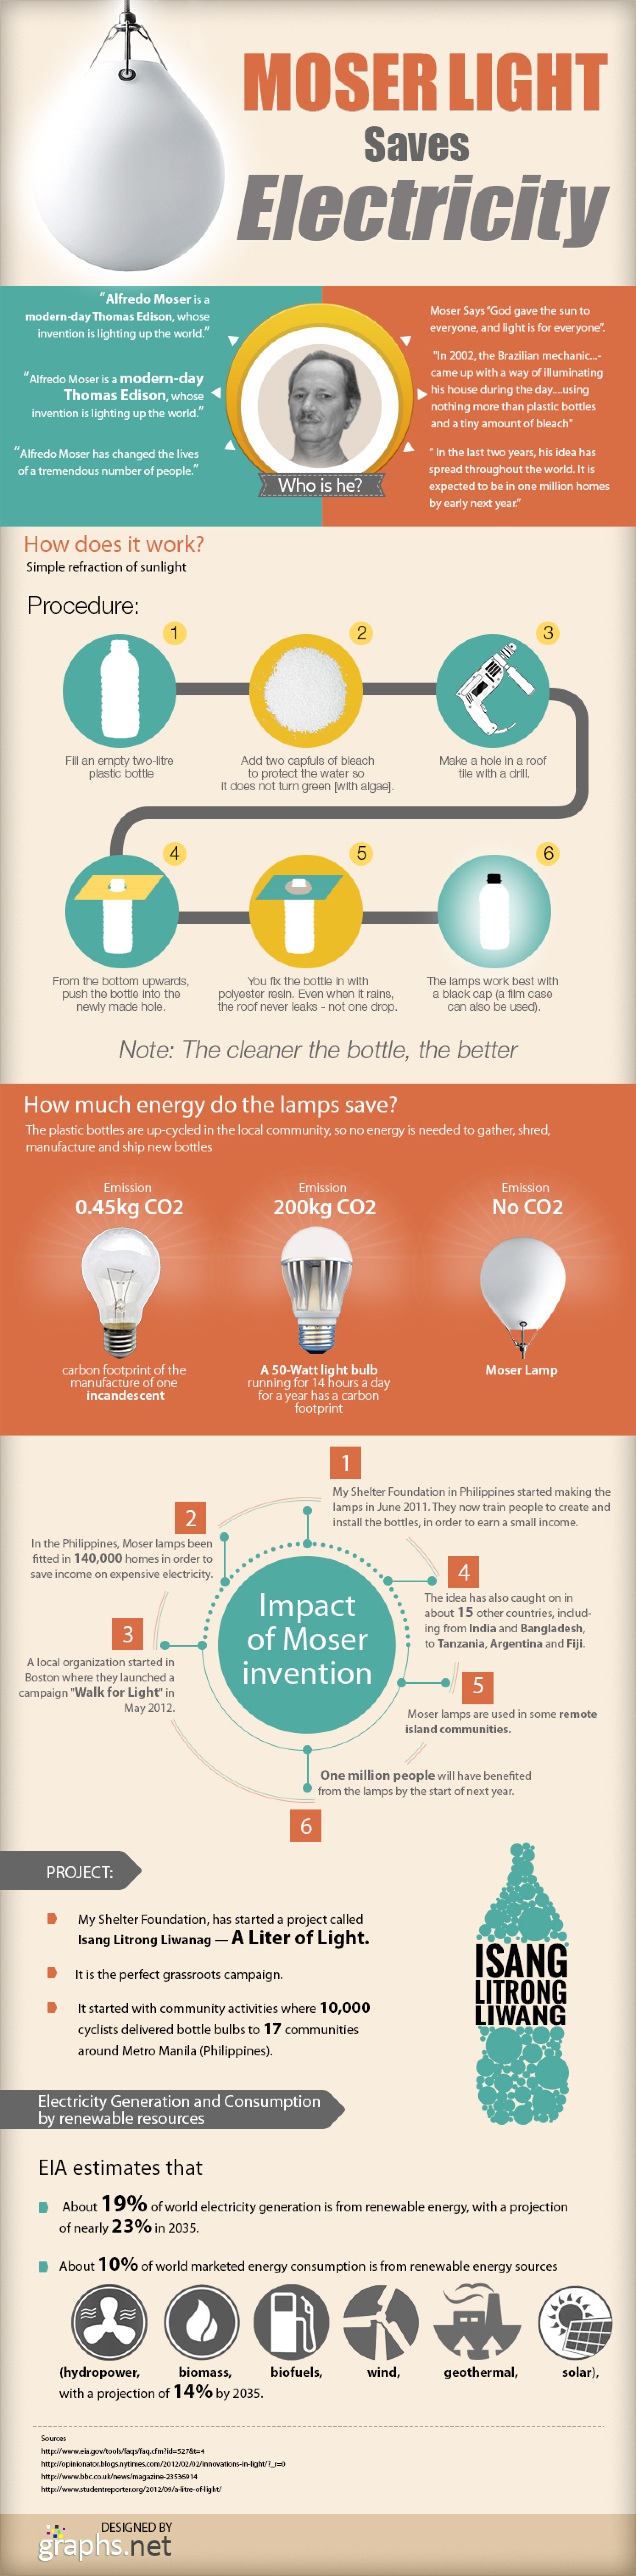 Moser Light Infographic